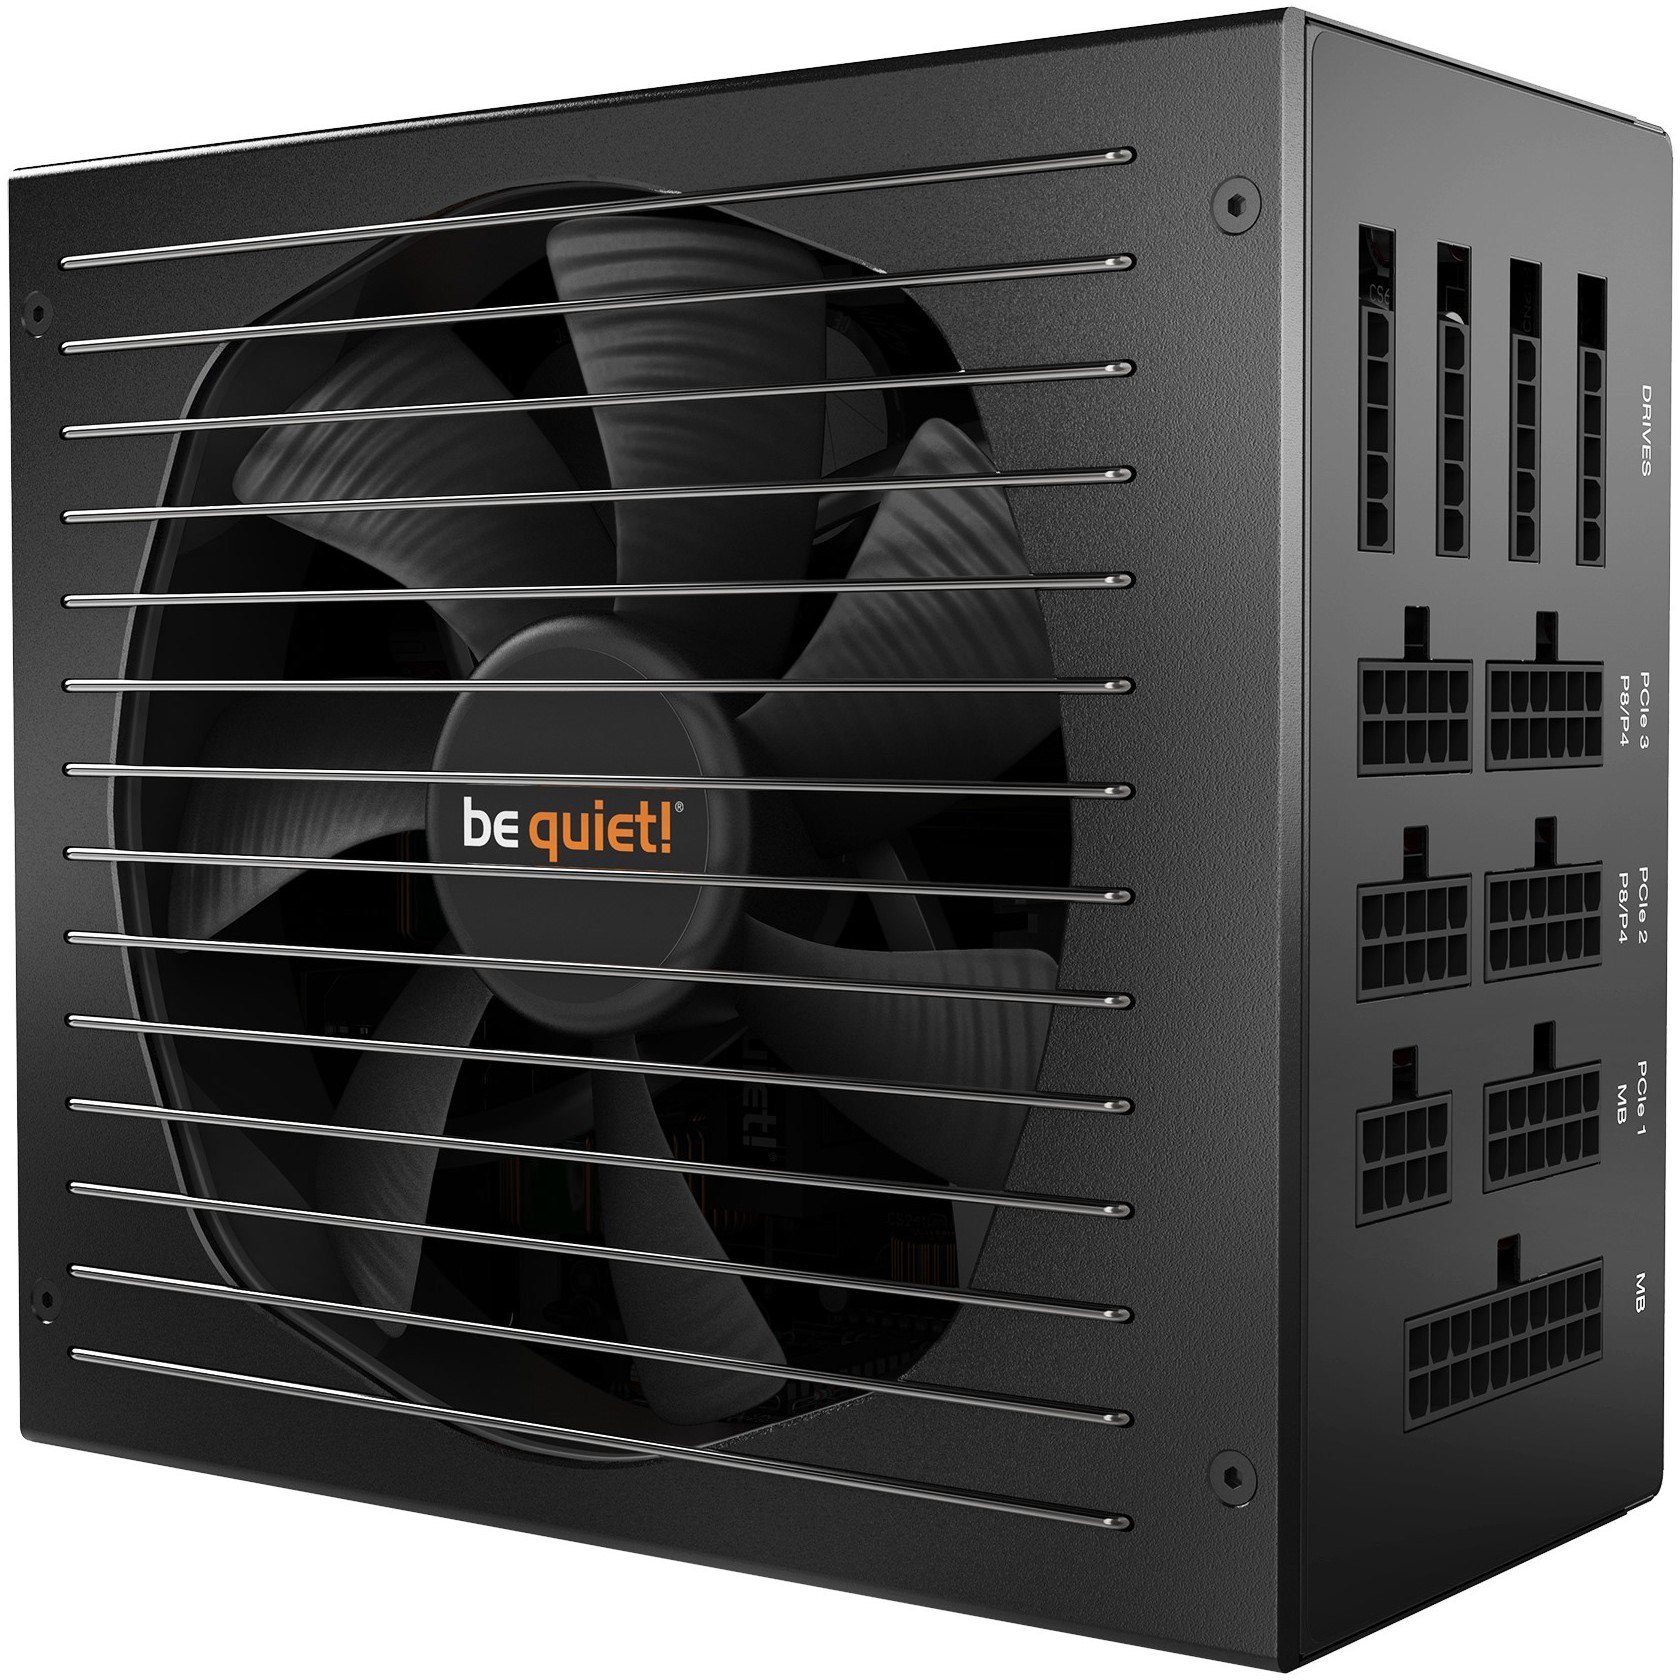 be quiet! Straight Power 11 power supply unit - BN284